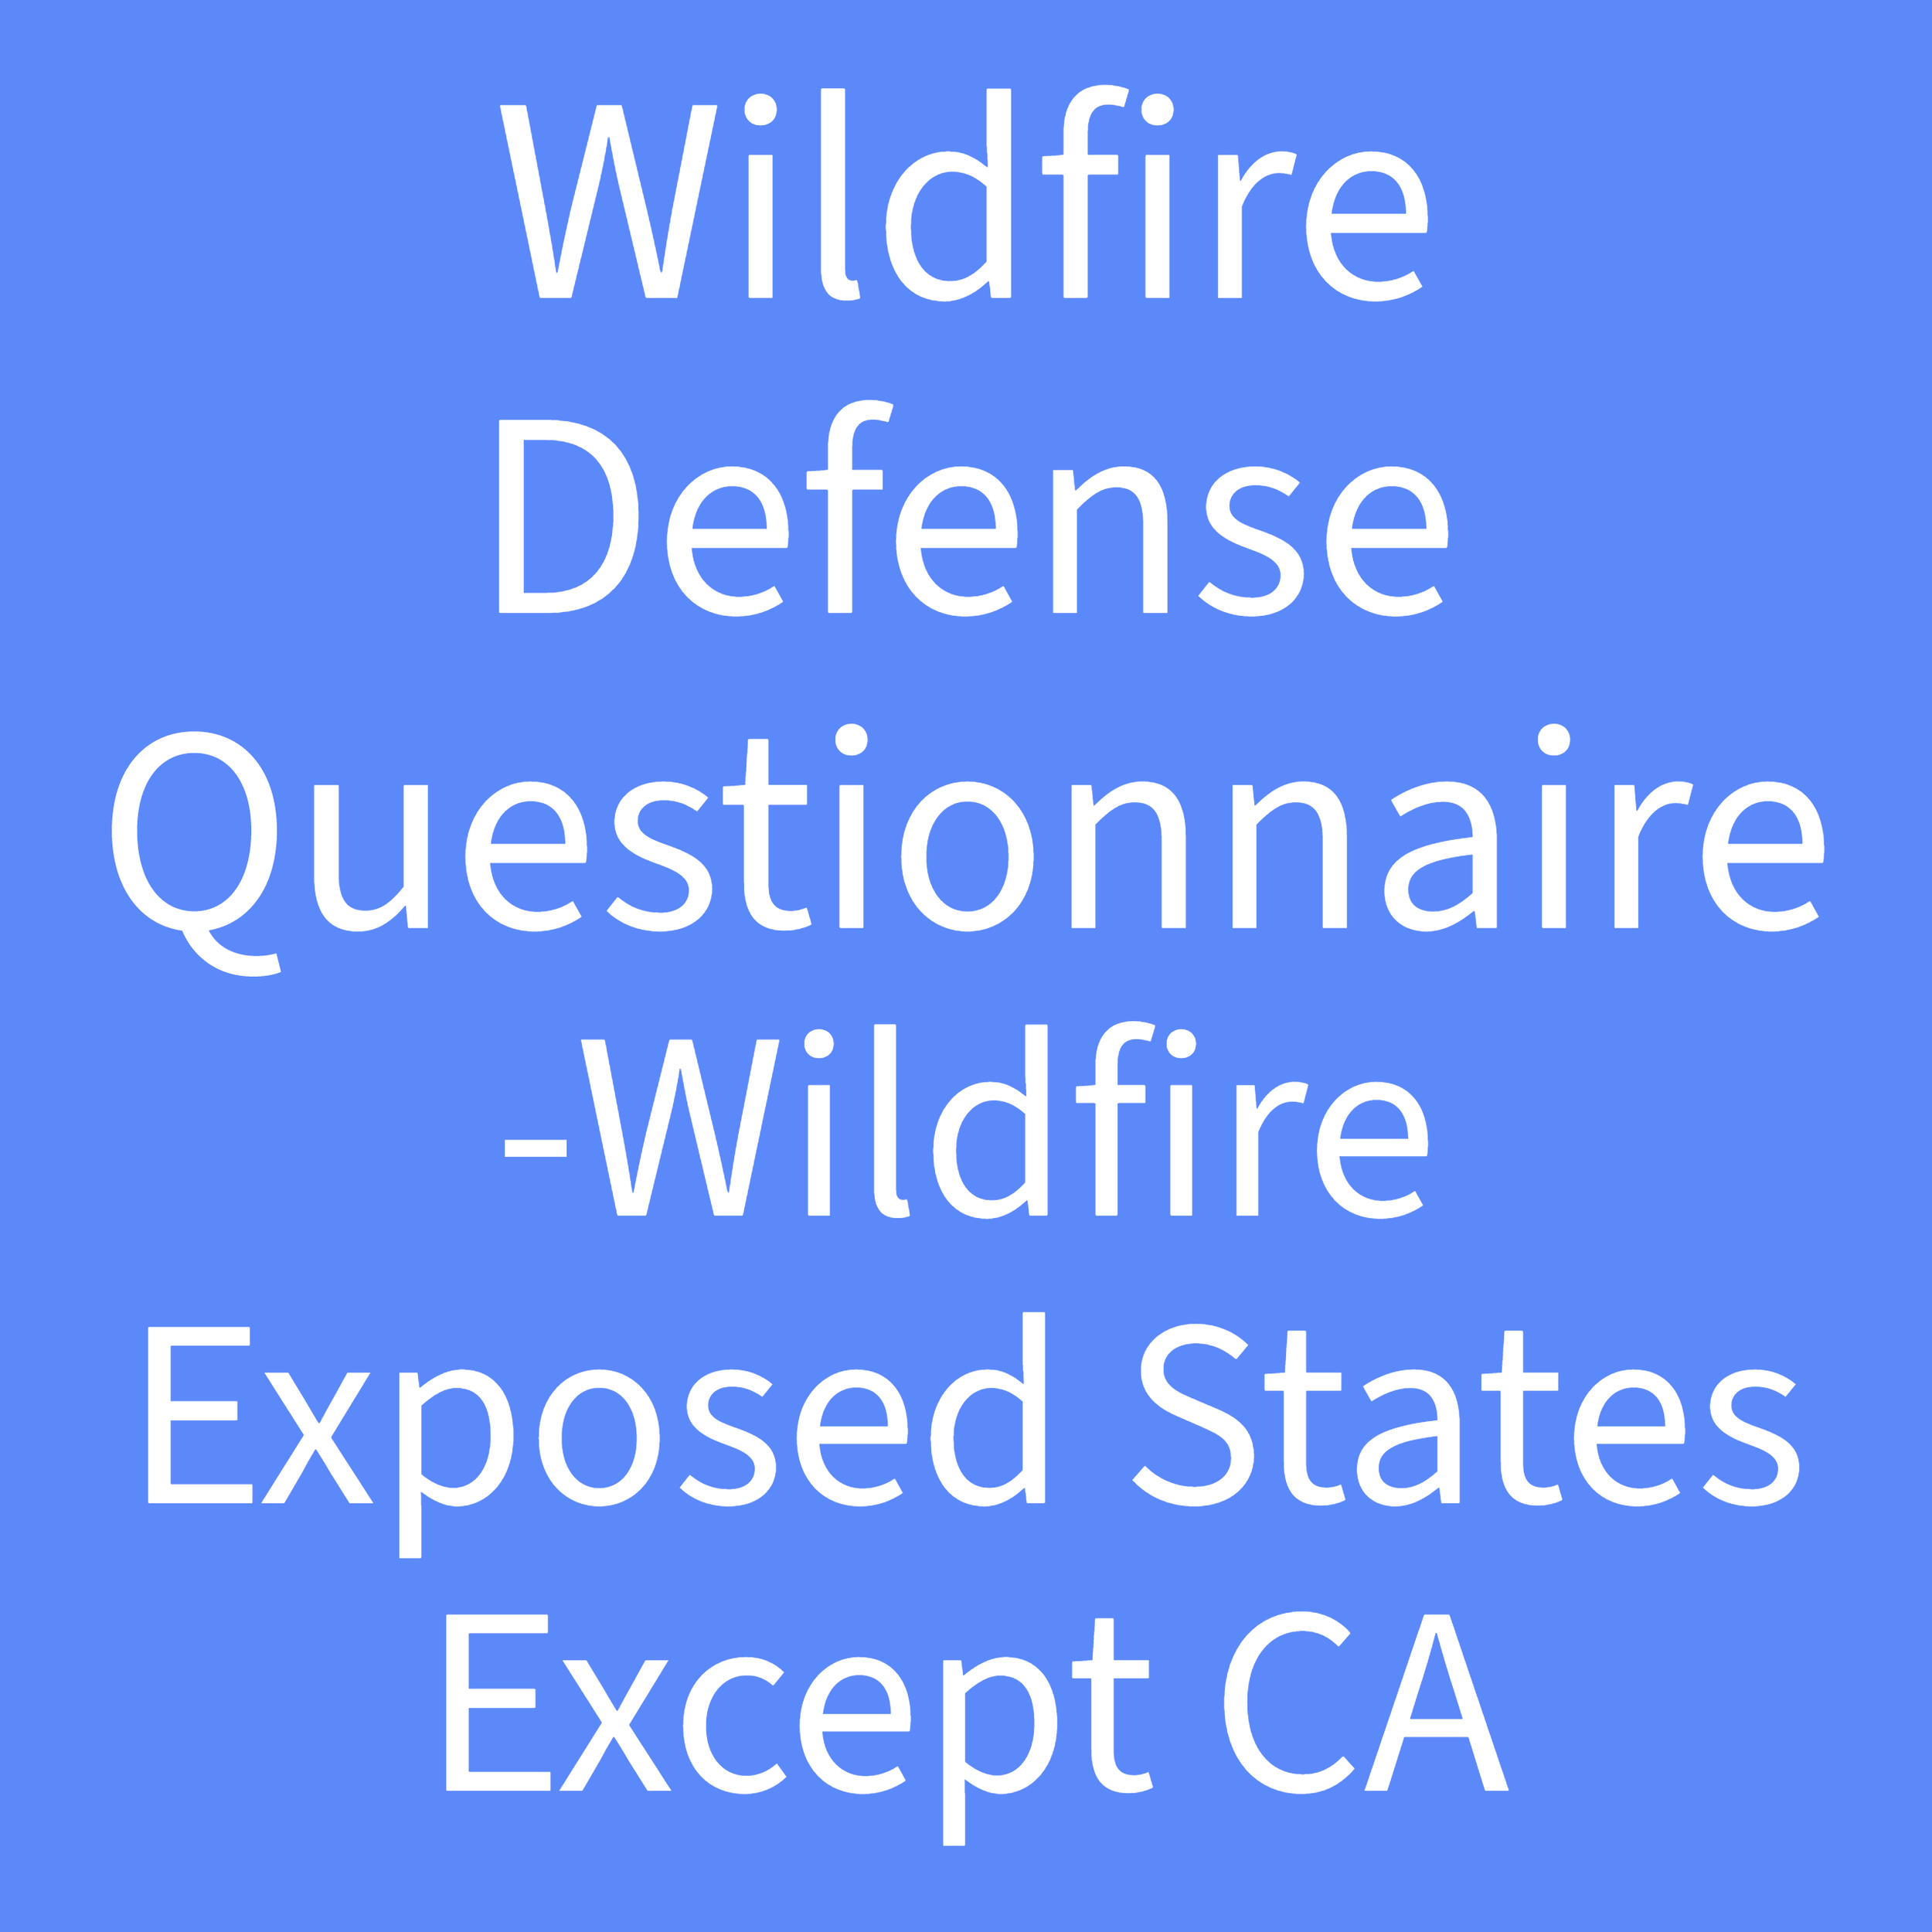 Wildfire Defense Questionnaire - except CA 